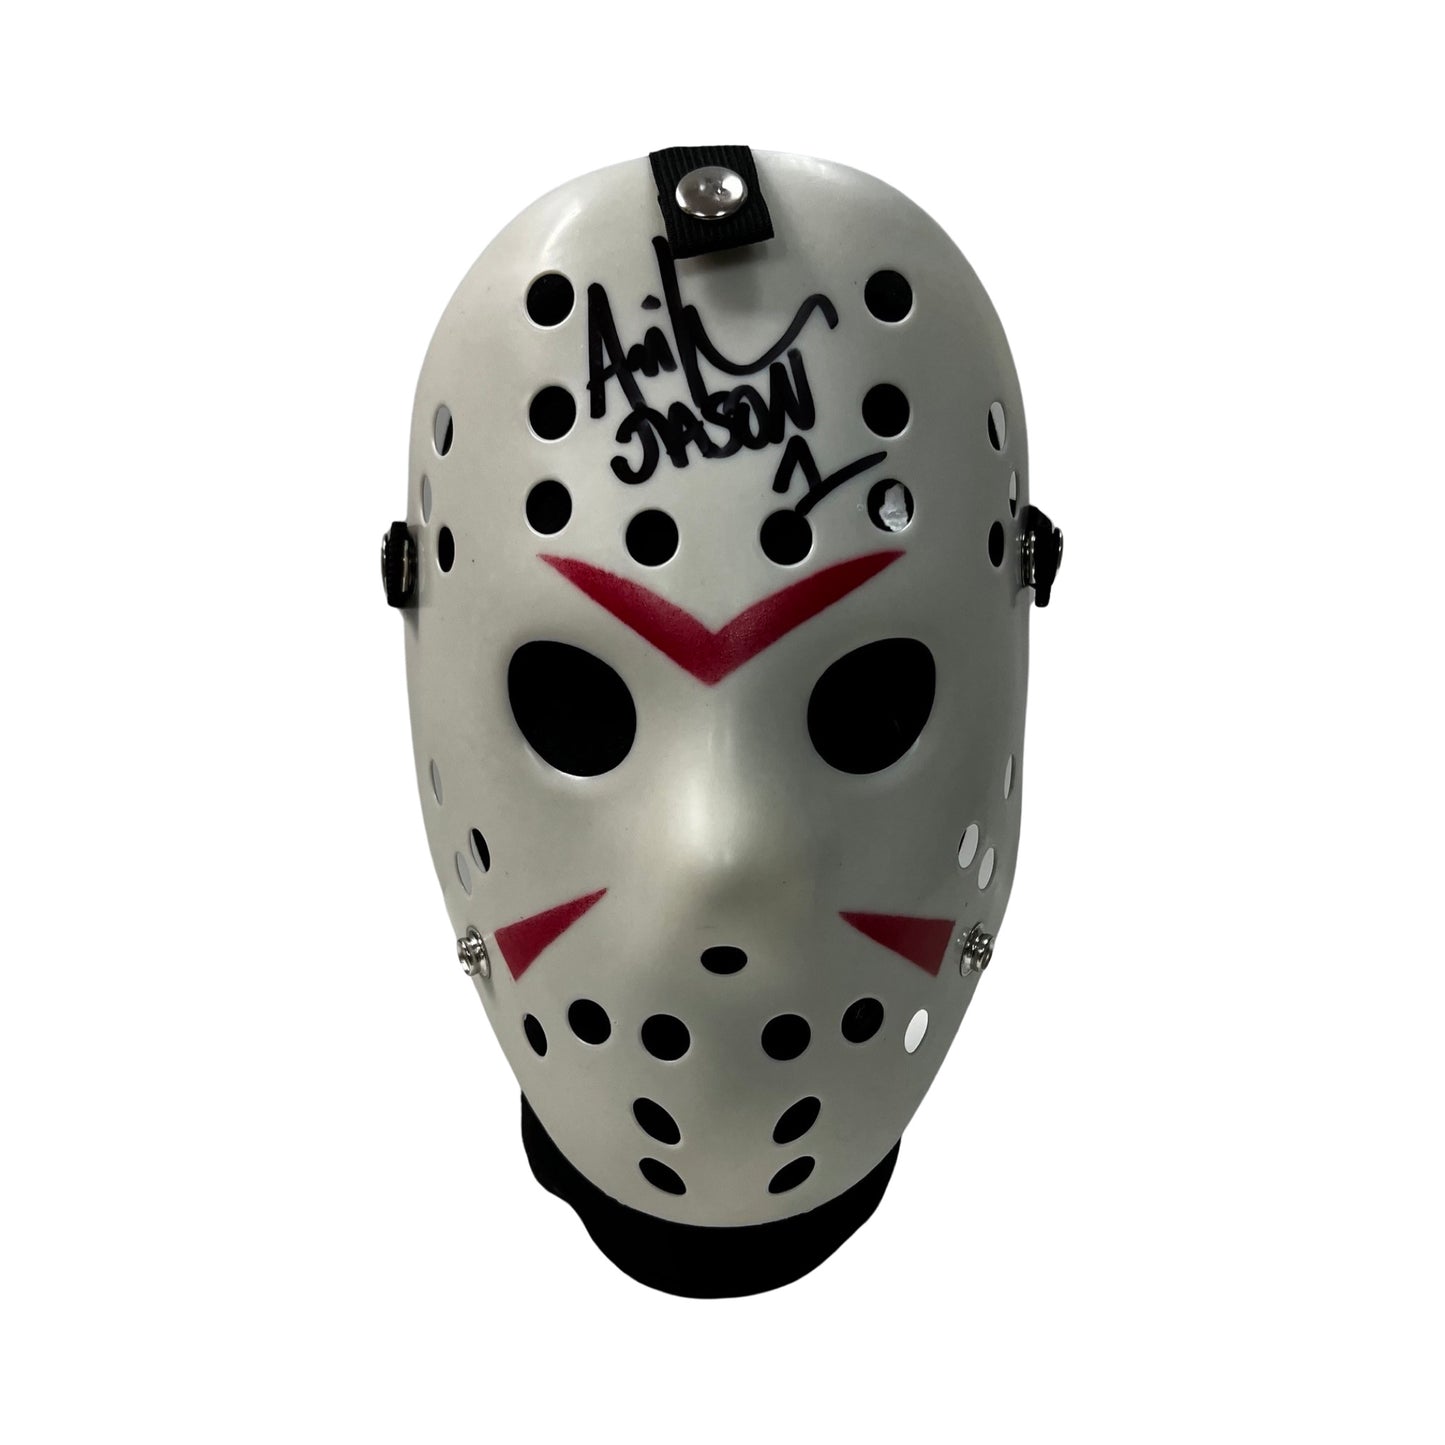 Ari Lehman Autographed Jason Voorhees Friday the 13th White Mask “Jason 1” Inscription Steiner CX